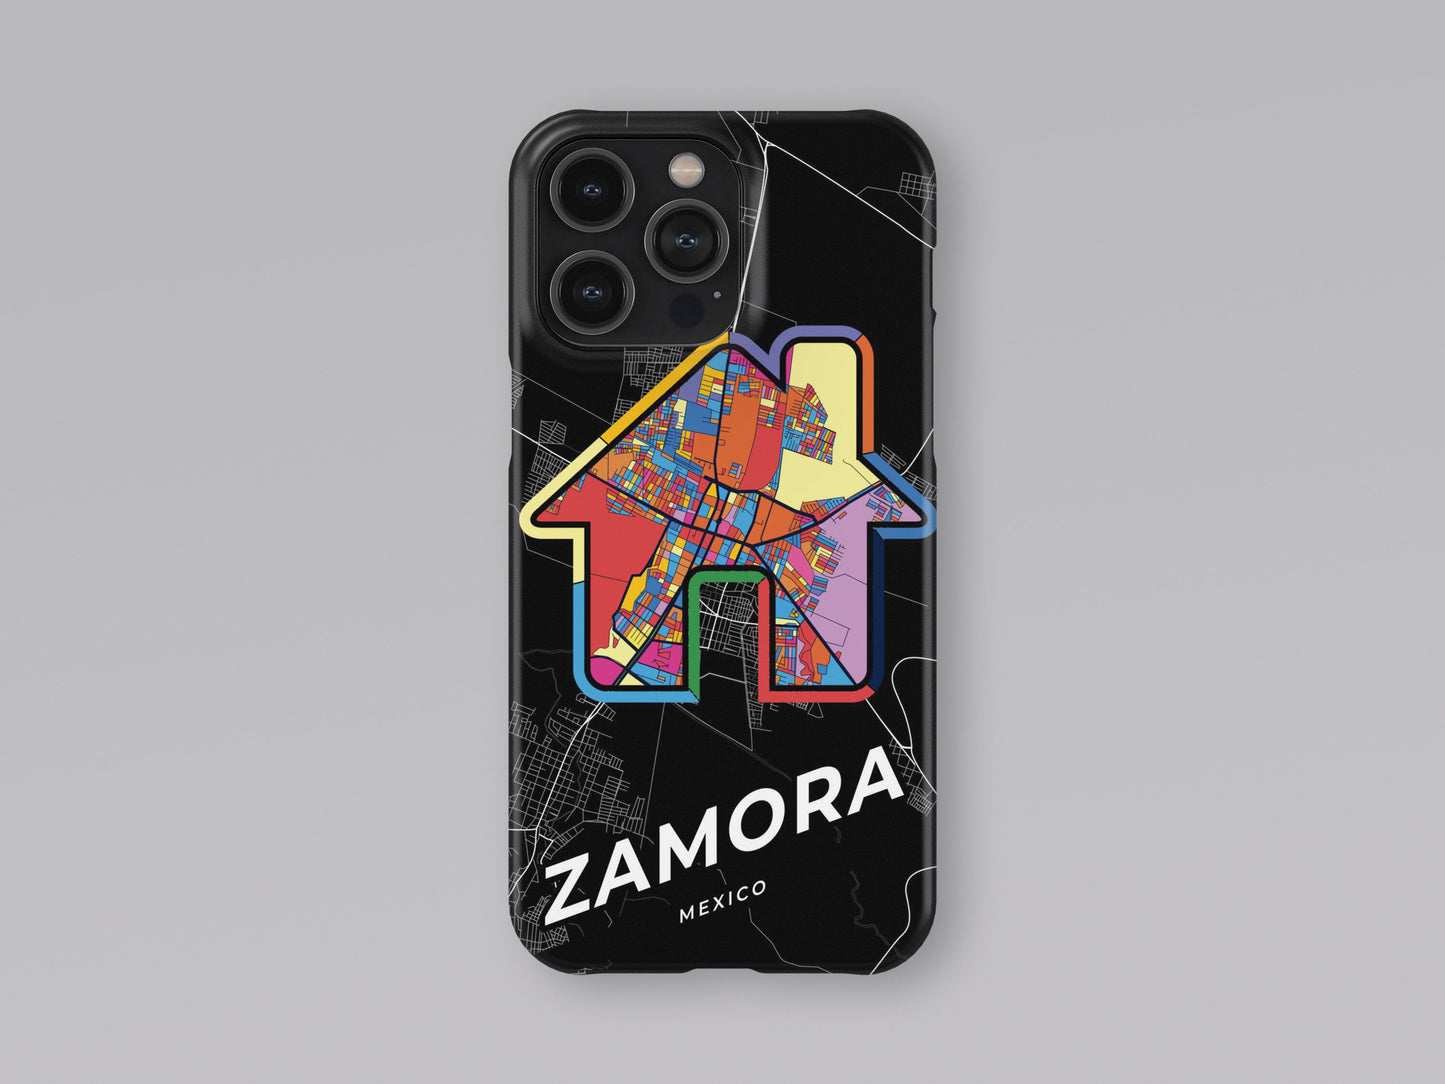 Zamora Mexico slim phone case with colorful icon 3